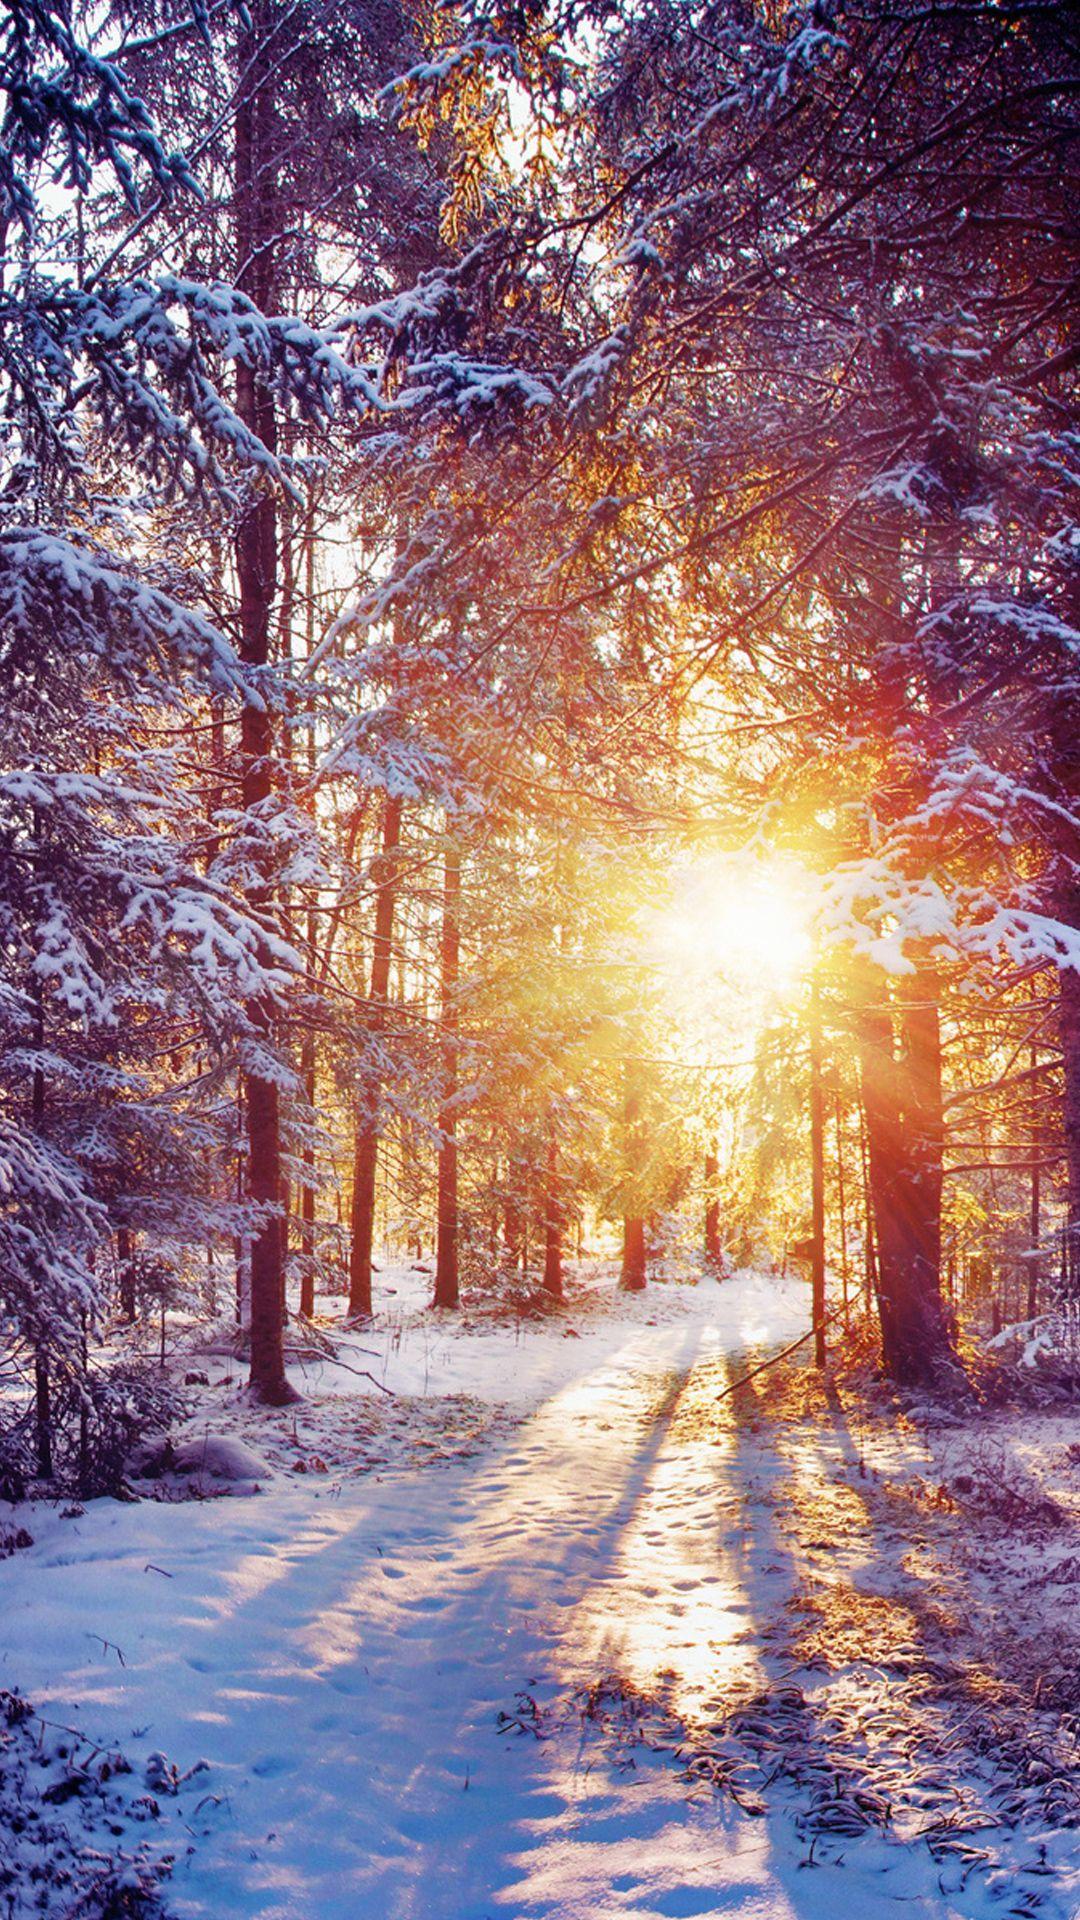 BEAUTIFUL NATURE WALLPAPER FREE TO DOWNLOAD. Style. Winter landscape, iPhone wallpaper winter, Winter wallpaper